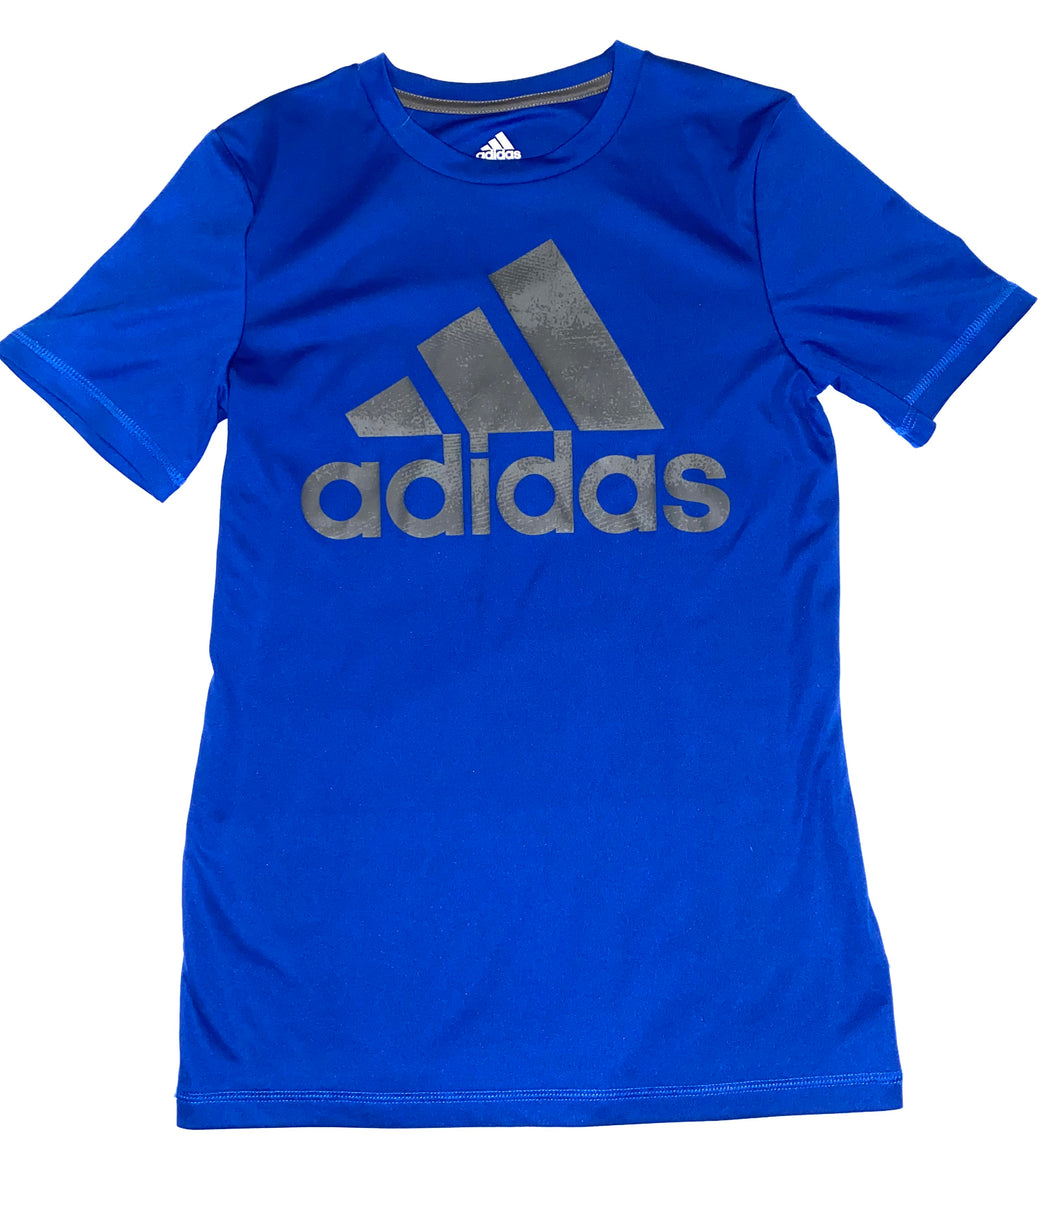 Adidas boys short sleeve active tee shirt M(10-12)